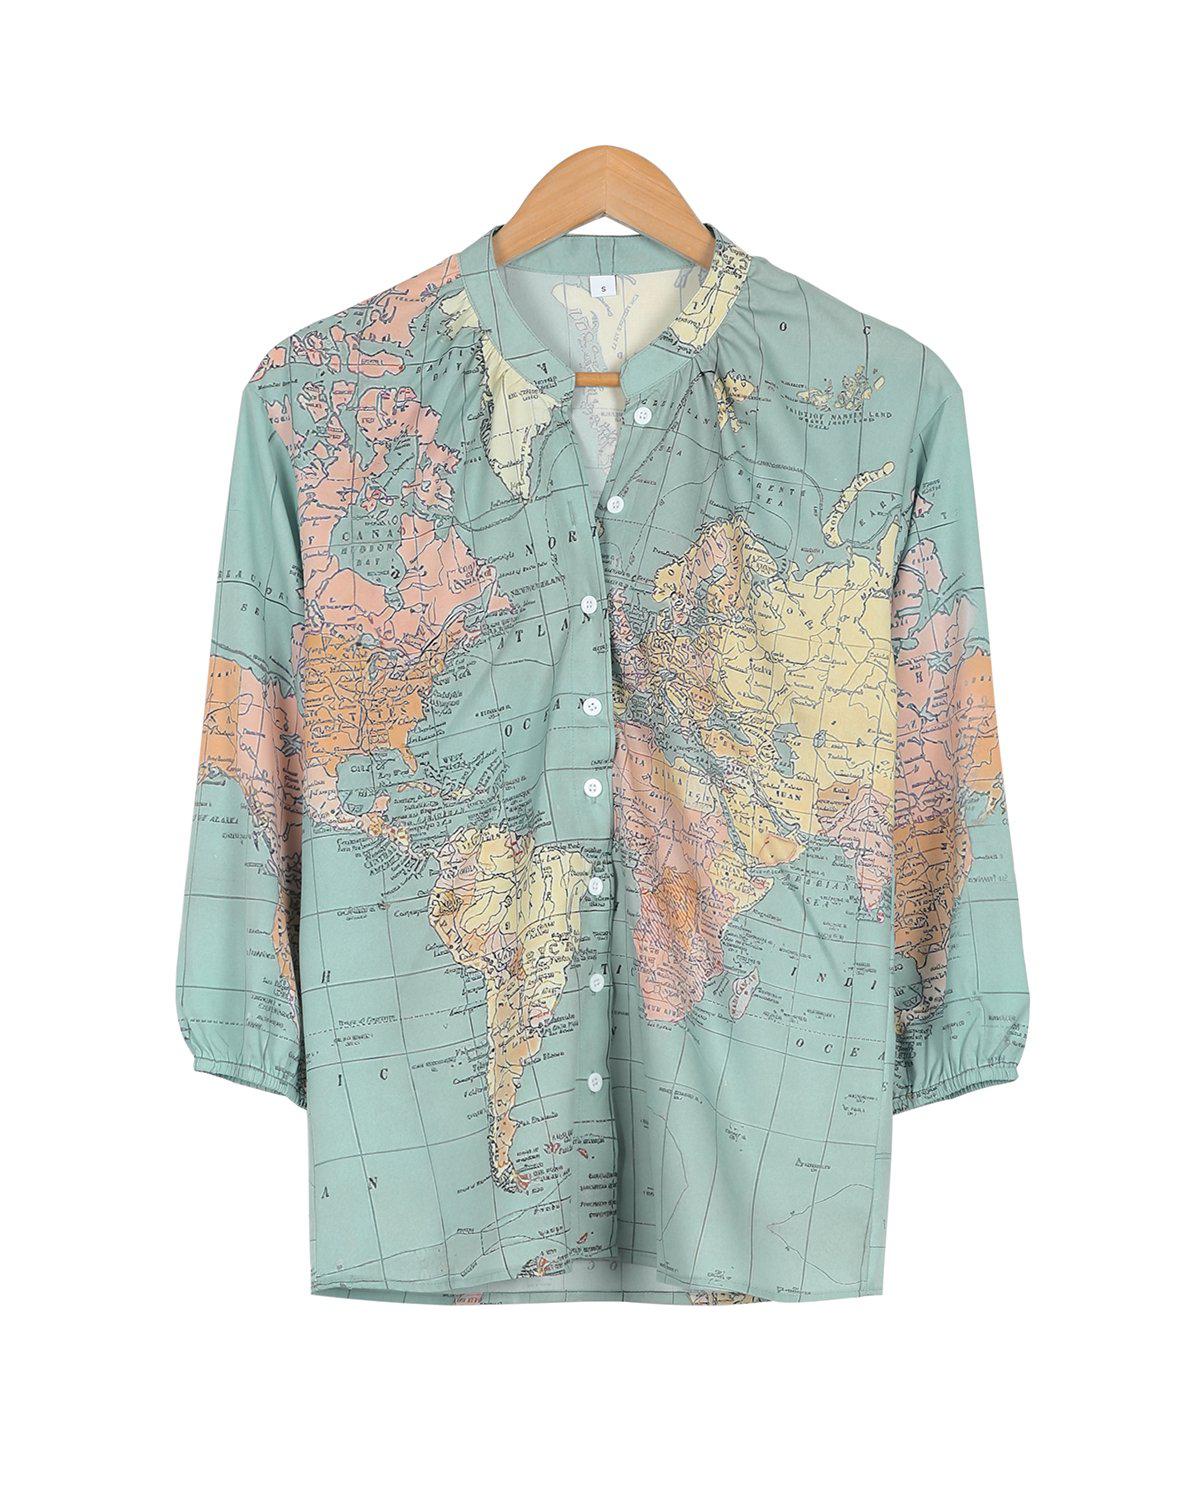 How Worldly Globe Print Shirt